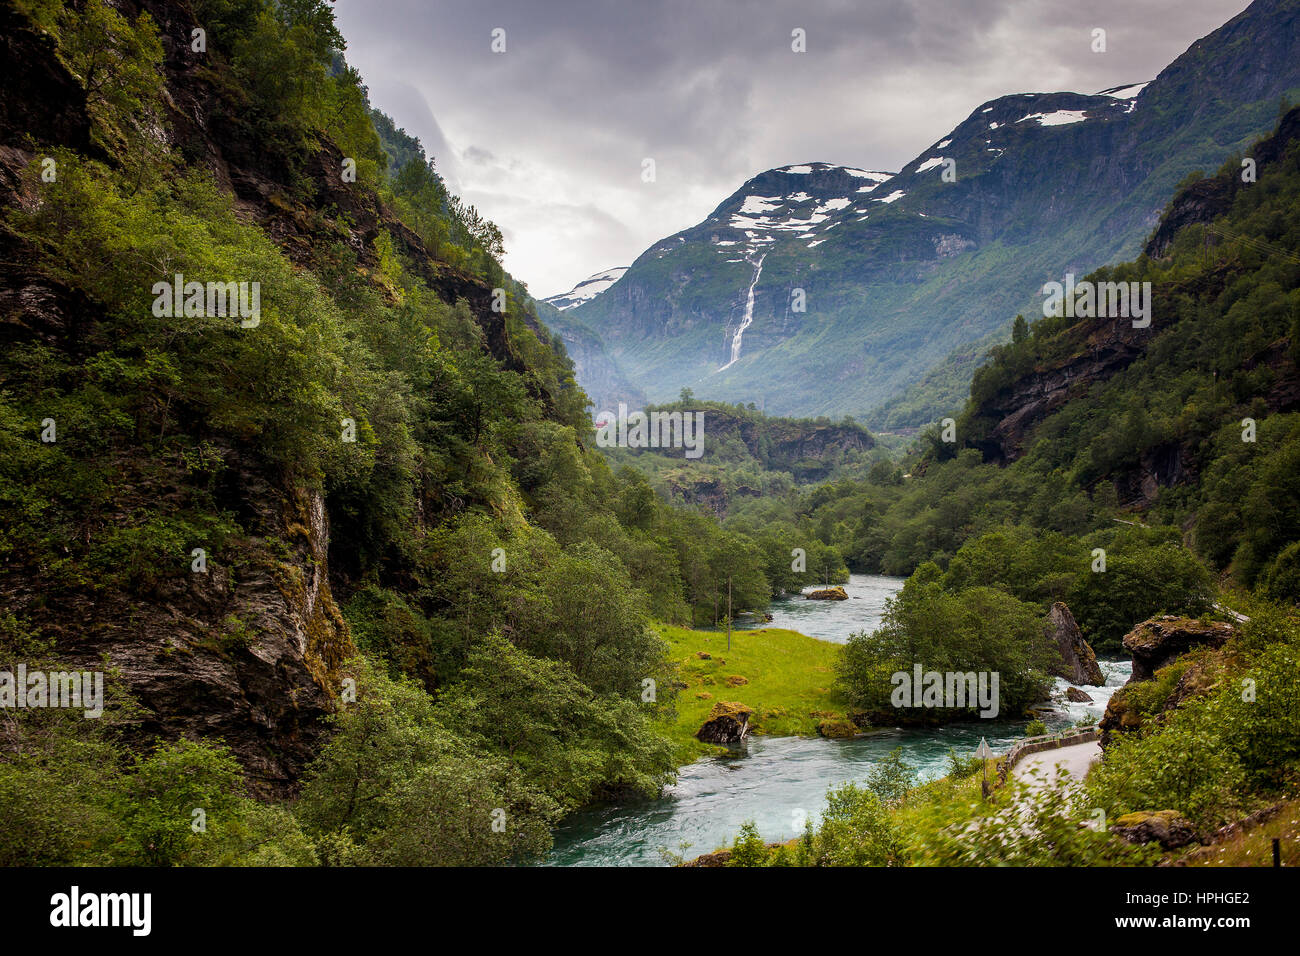 Views from Flamsbana train, Norway Stock Photo